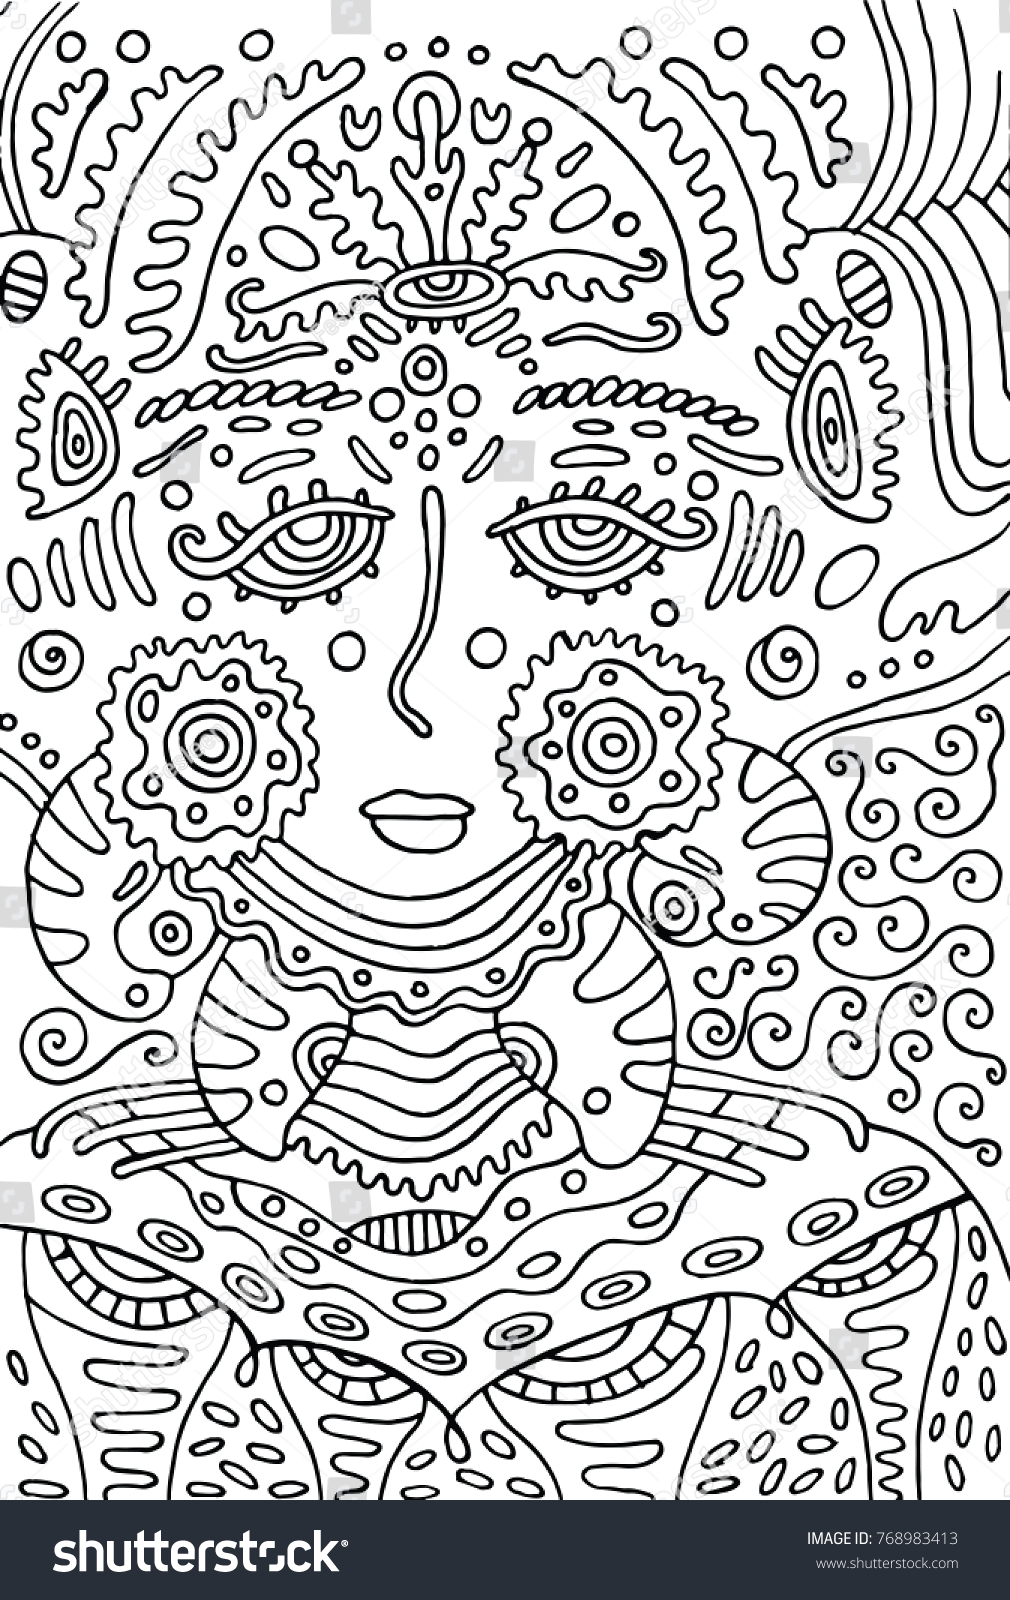 Alien goddess girl Doodle coloring page for adults Raster illustration